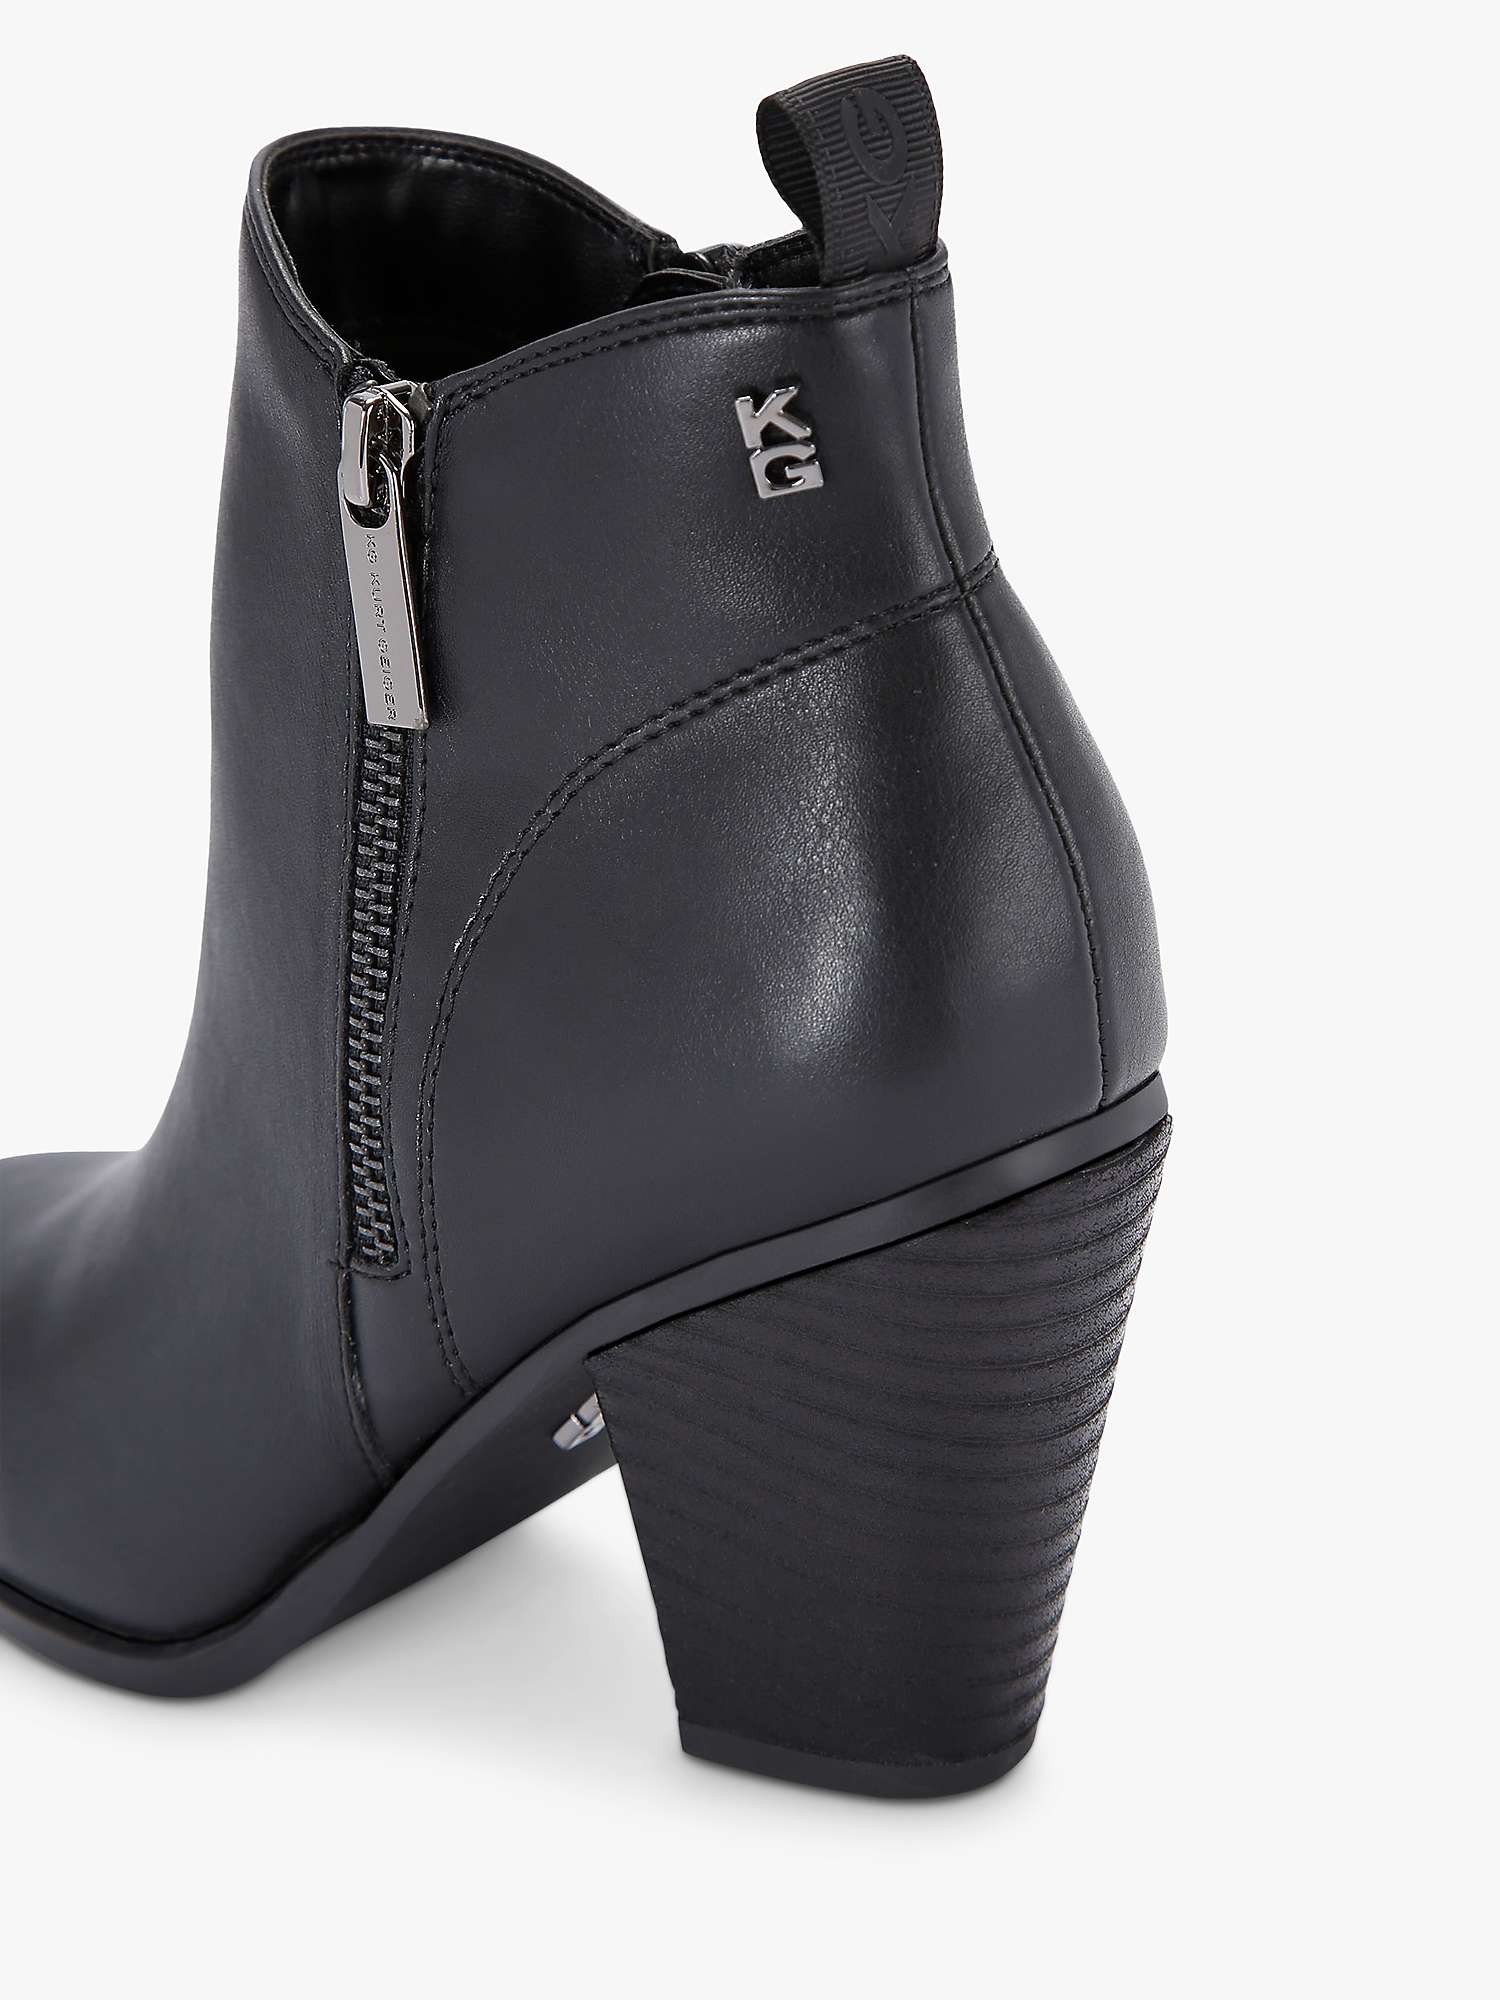 KG Kurt Geiger Stella Ankle Boots, Black at John Lewis & Partners